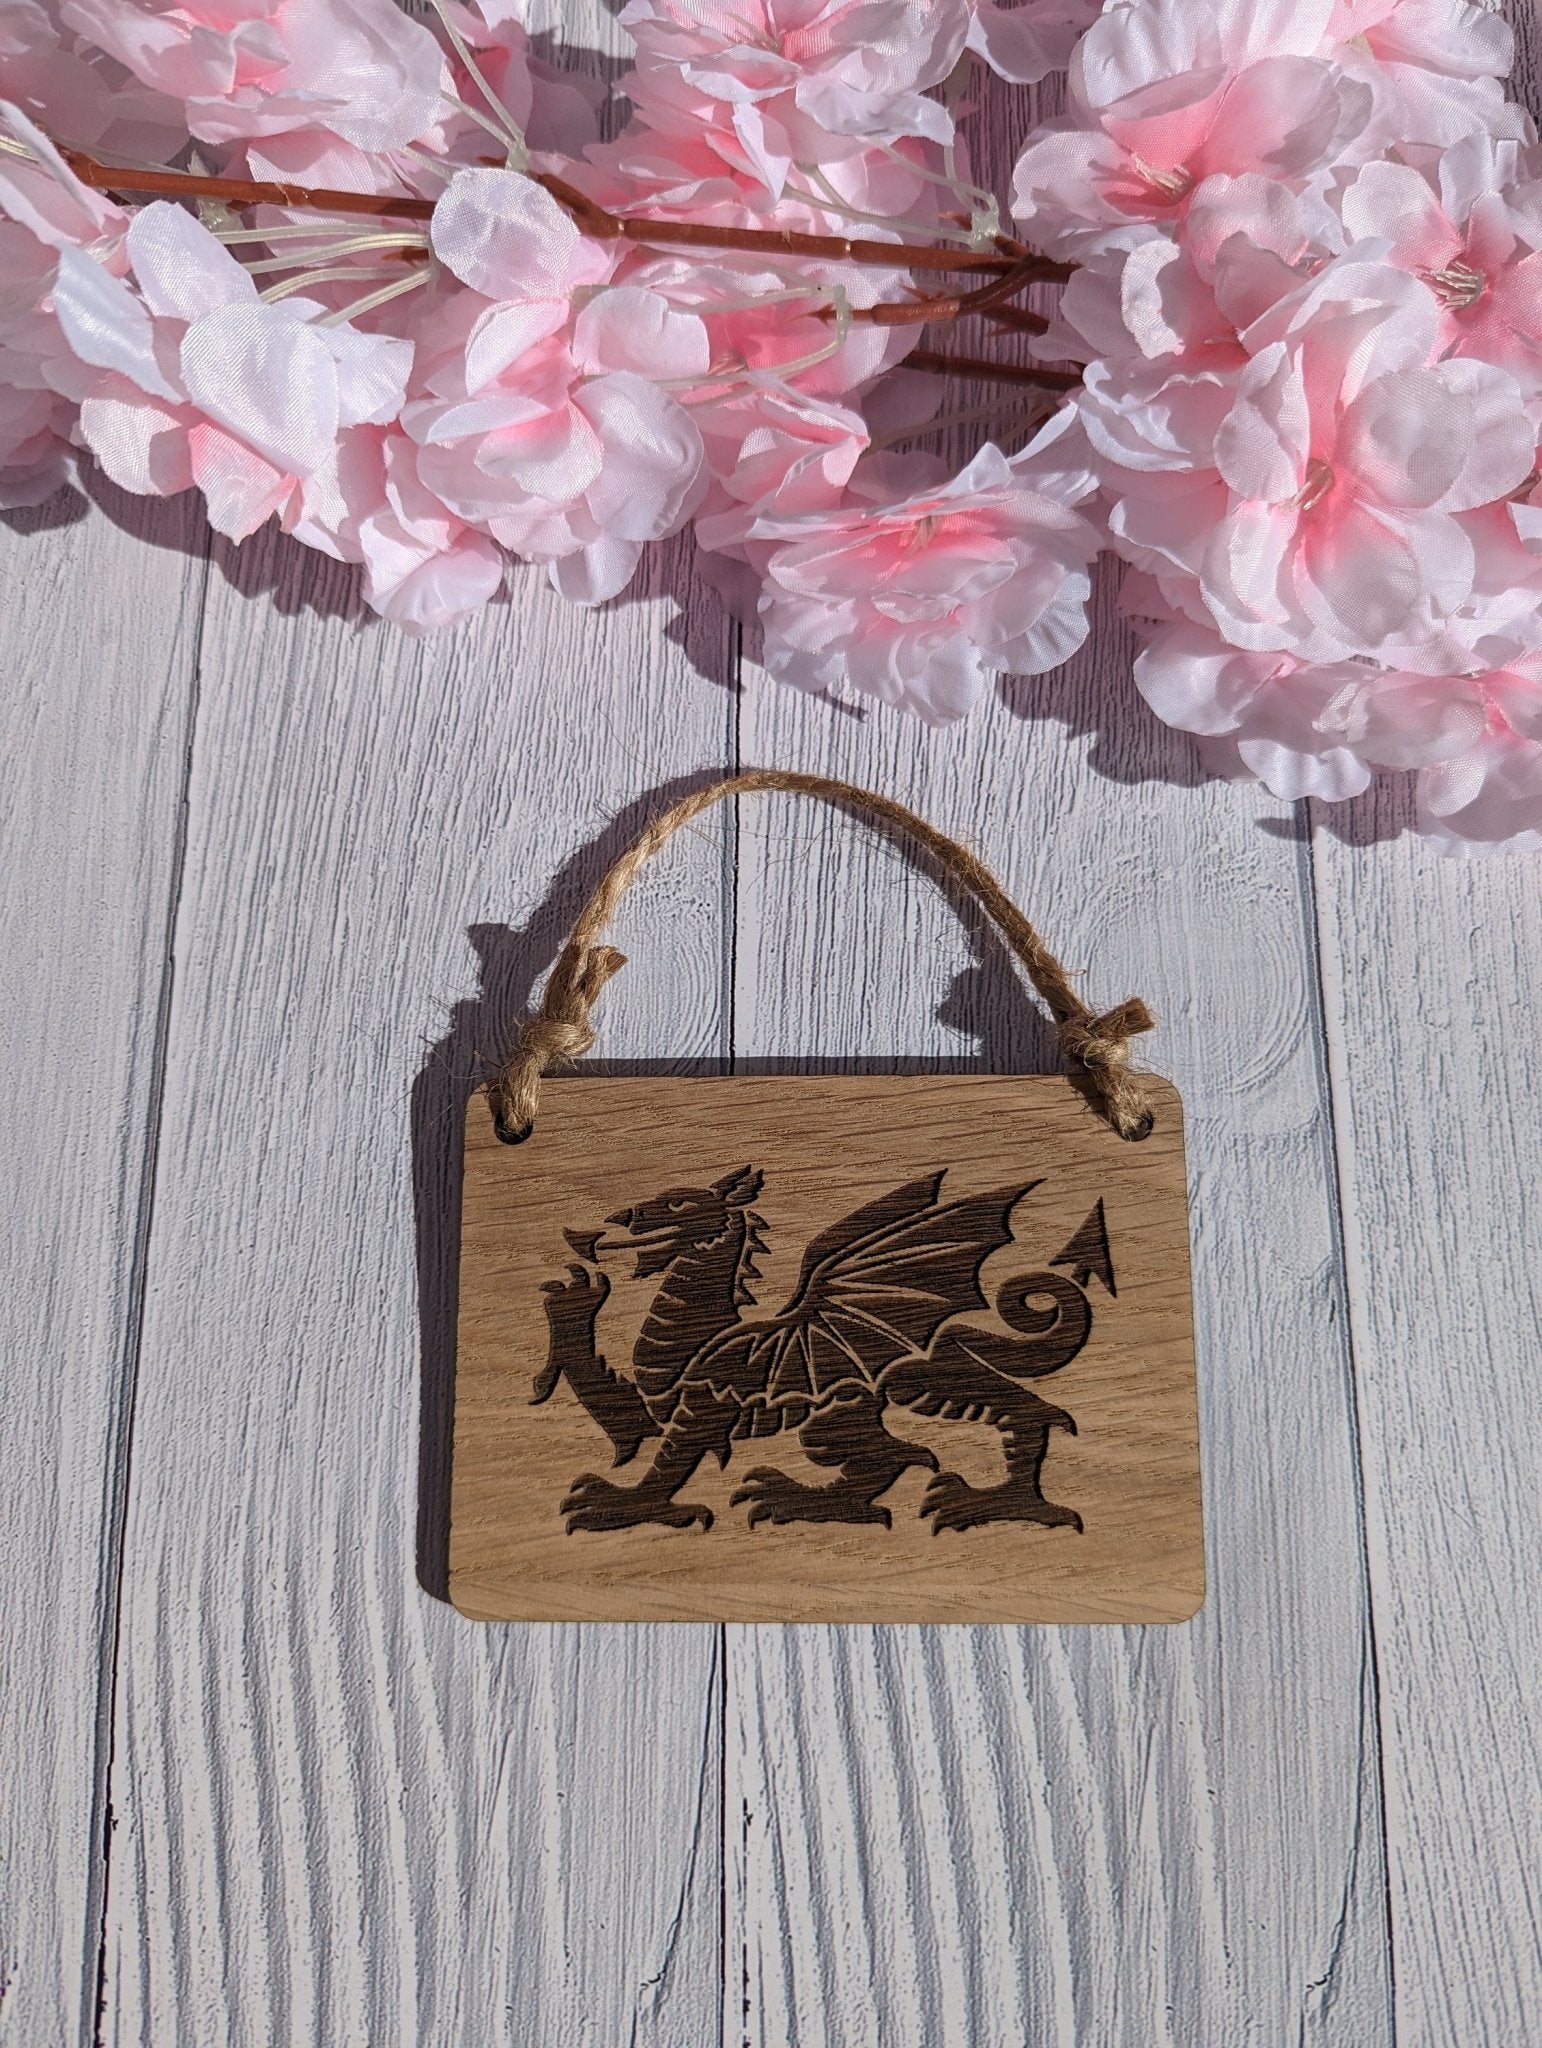 Patriotic Welsh Wooden Signs - Welsh Dragon Design in 4 Sizes - CherryGroveCraft